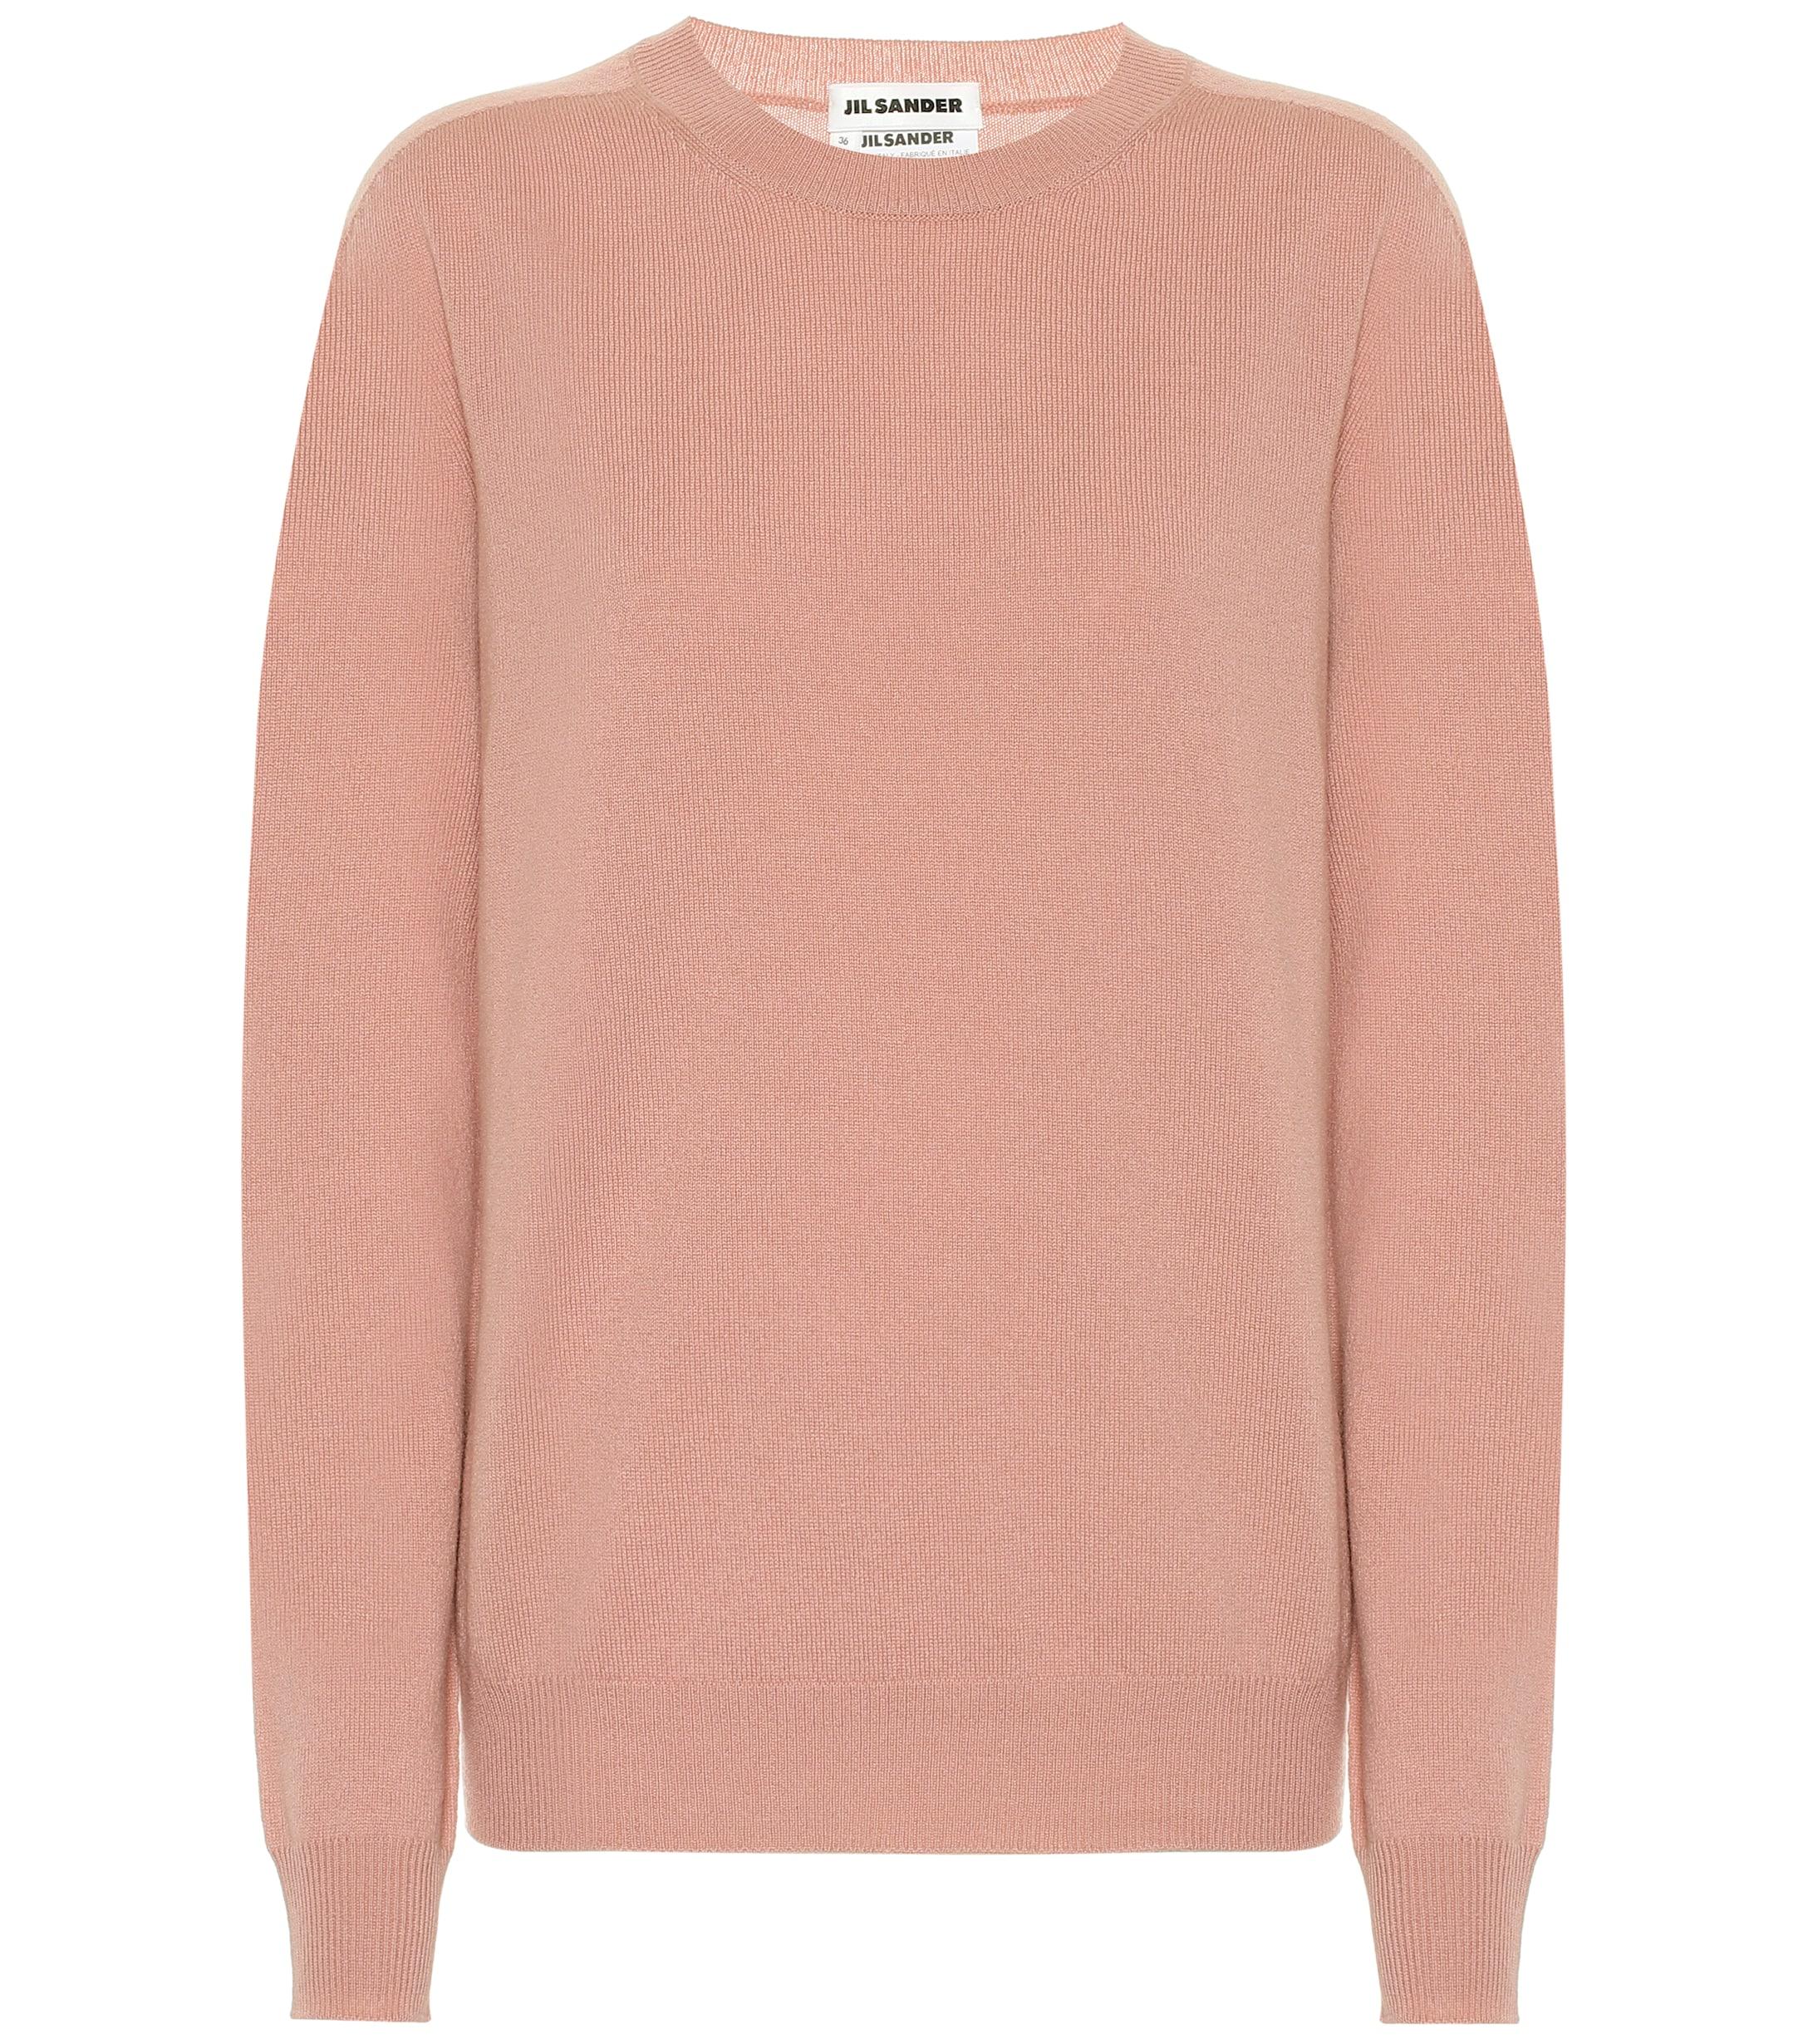 Jil Sander Cashmere Sweater in Pink - Lyst